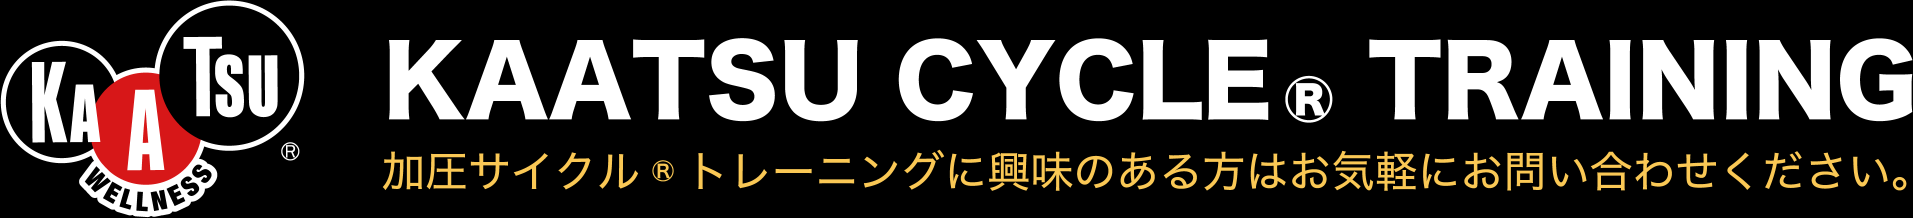 KAATSU CYCLE TRAINING